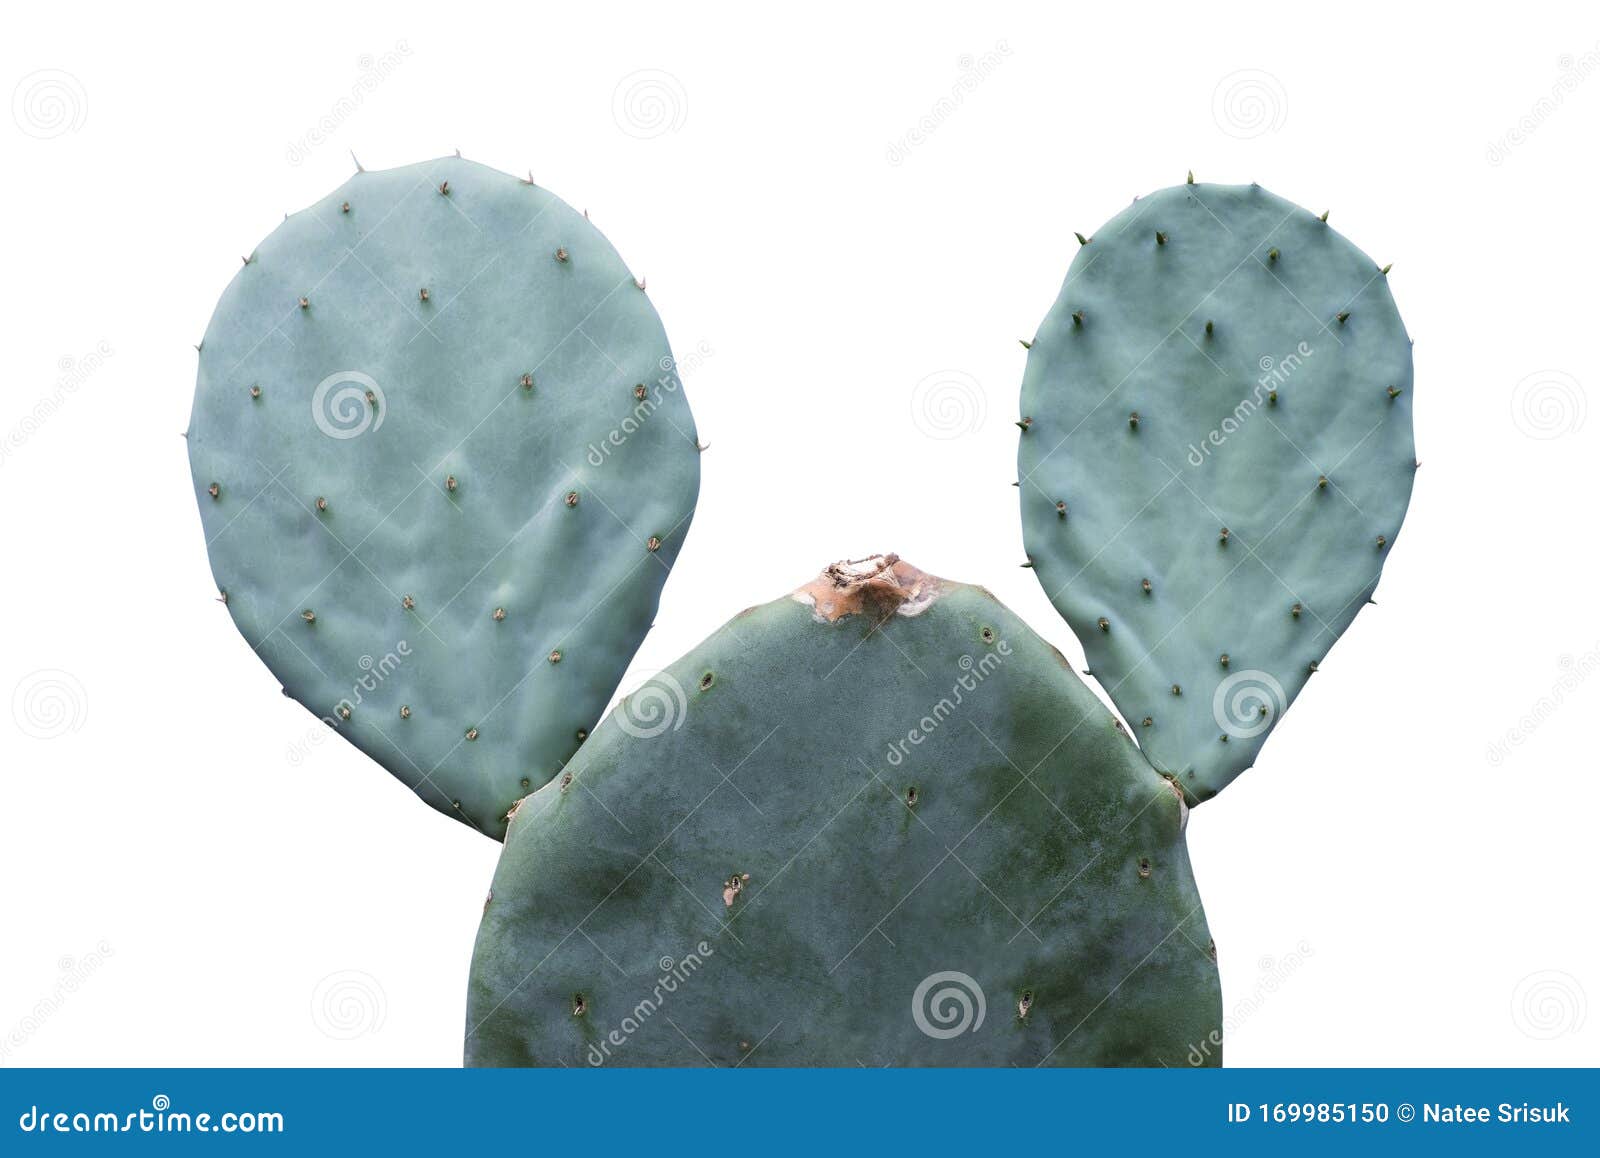 opuntia robusta cactus  on white background